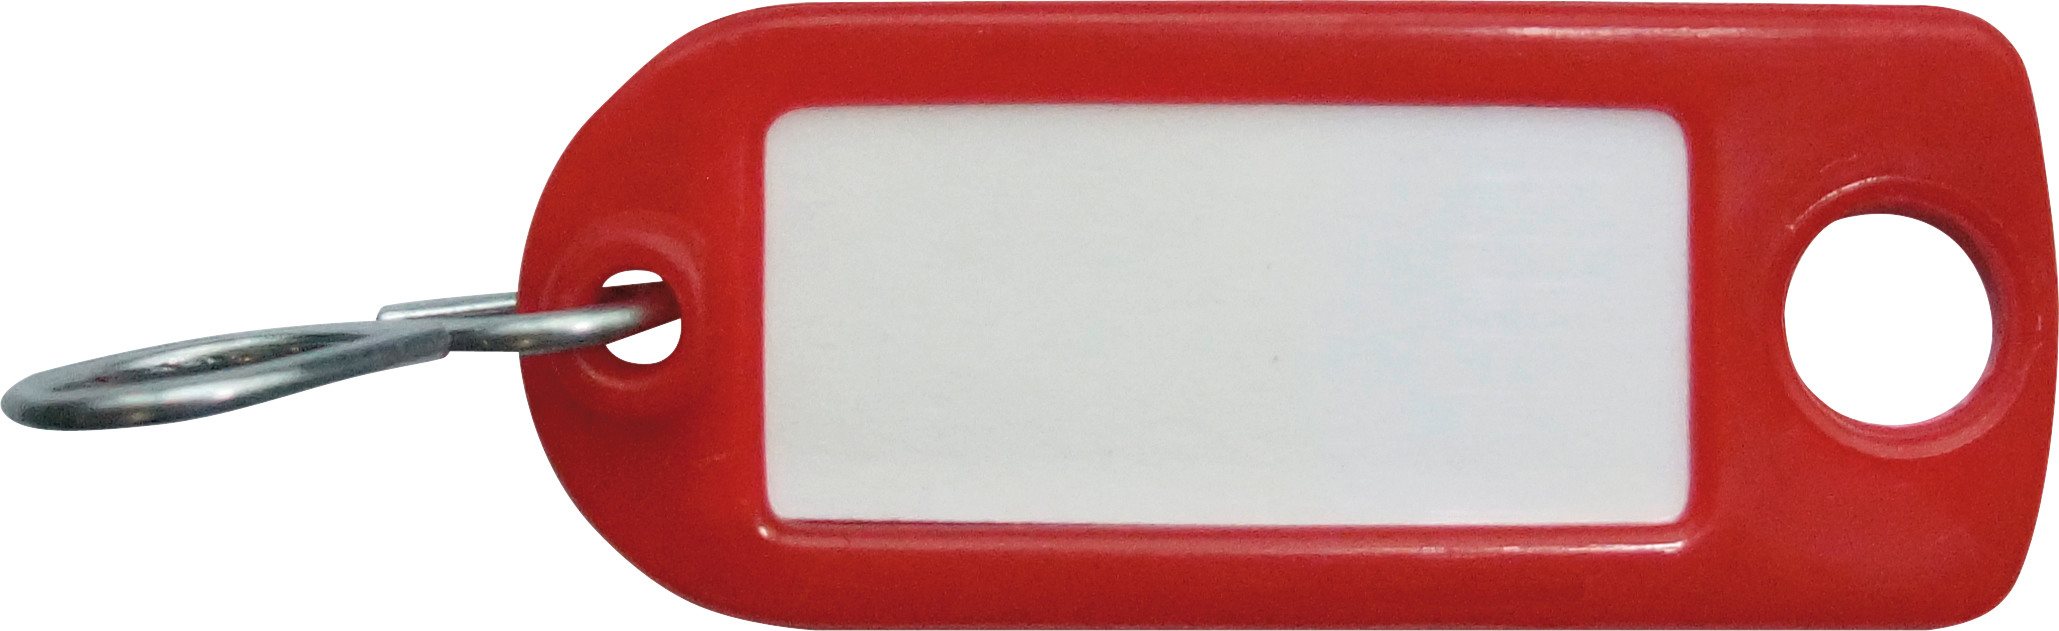 RIEFFEL SWITZERLAND Schlüssel-Anhänger 8034FS ROT rot 100 Stück